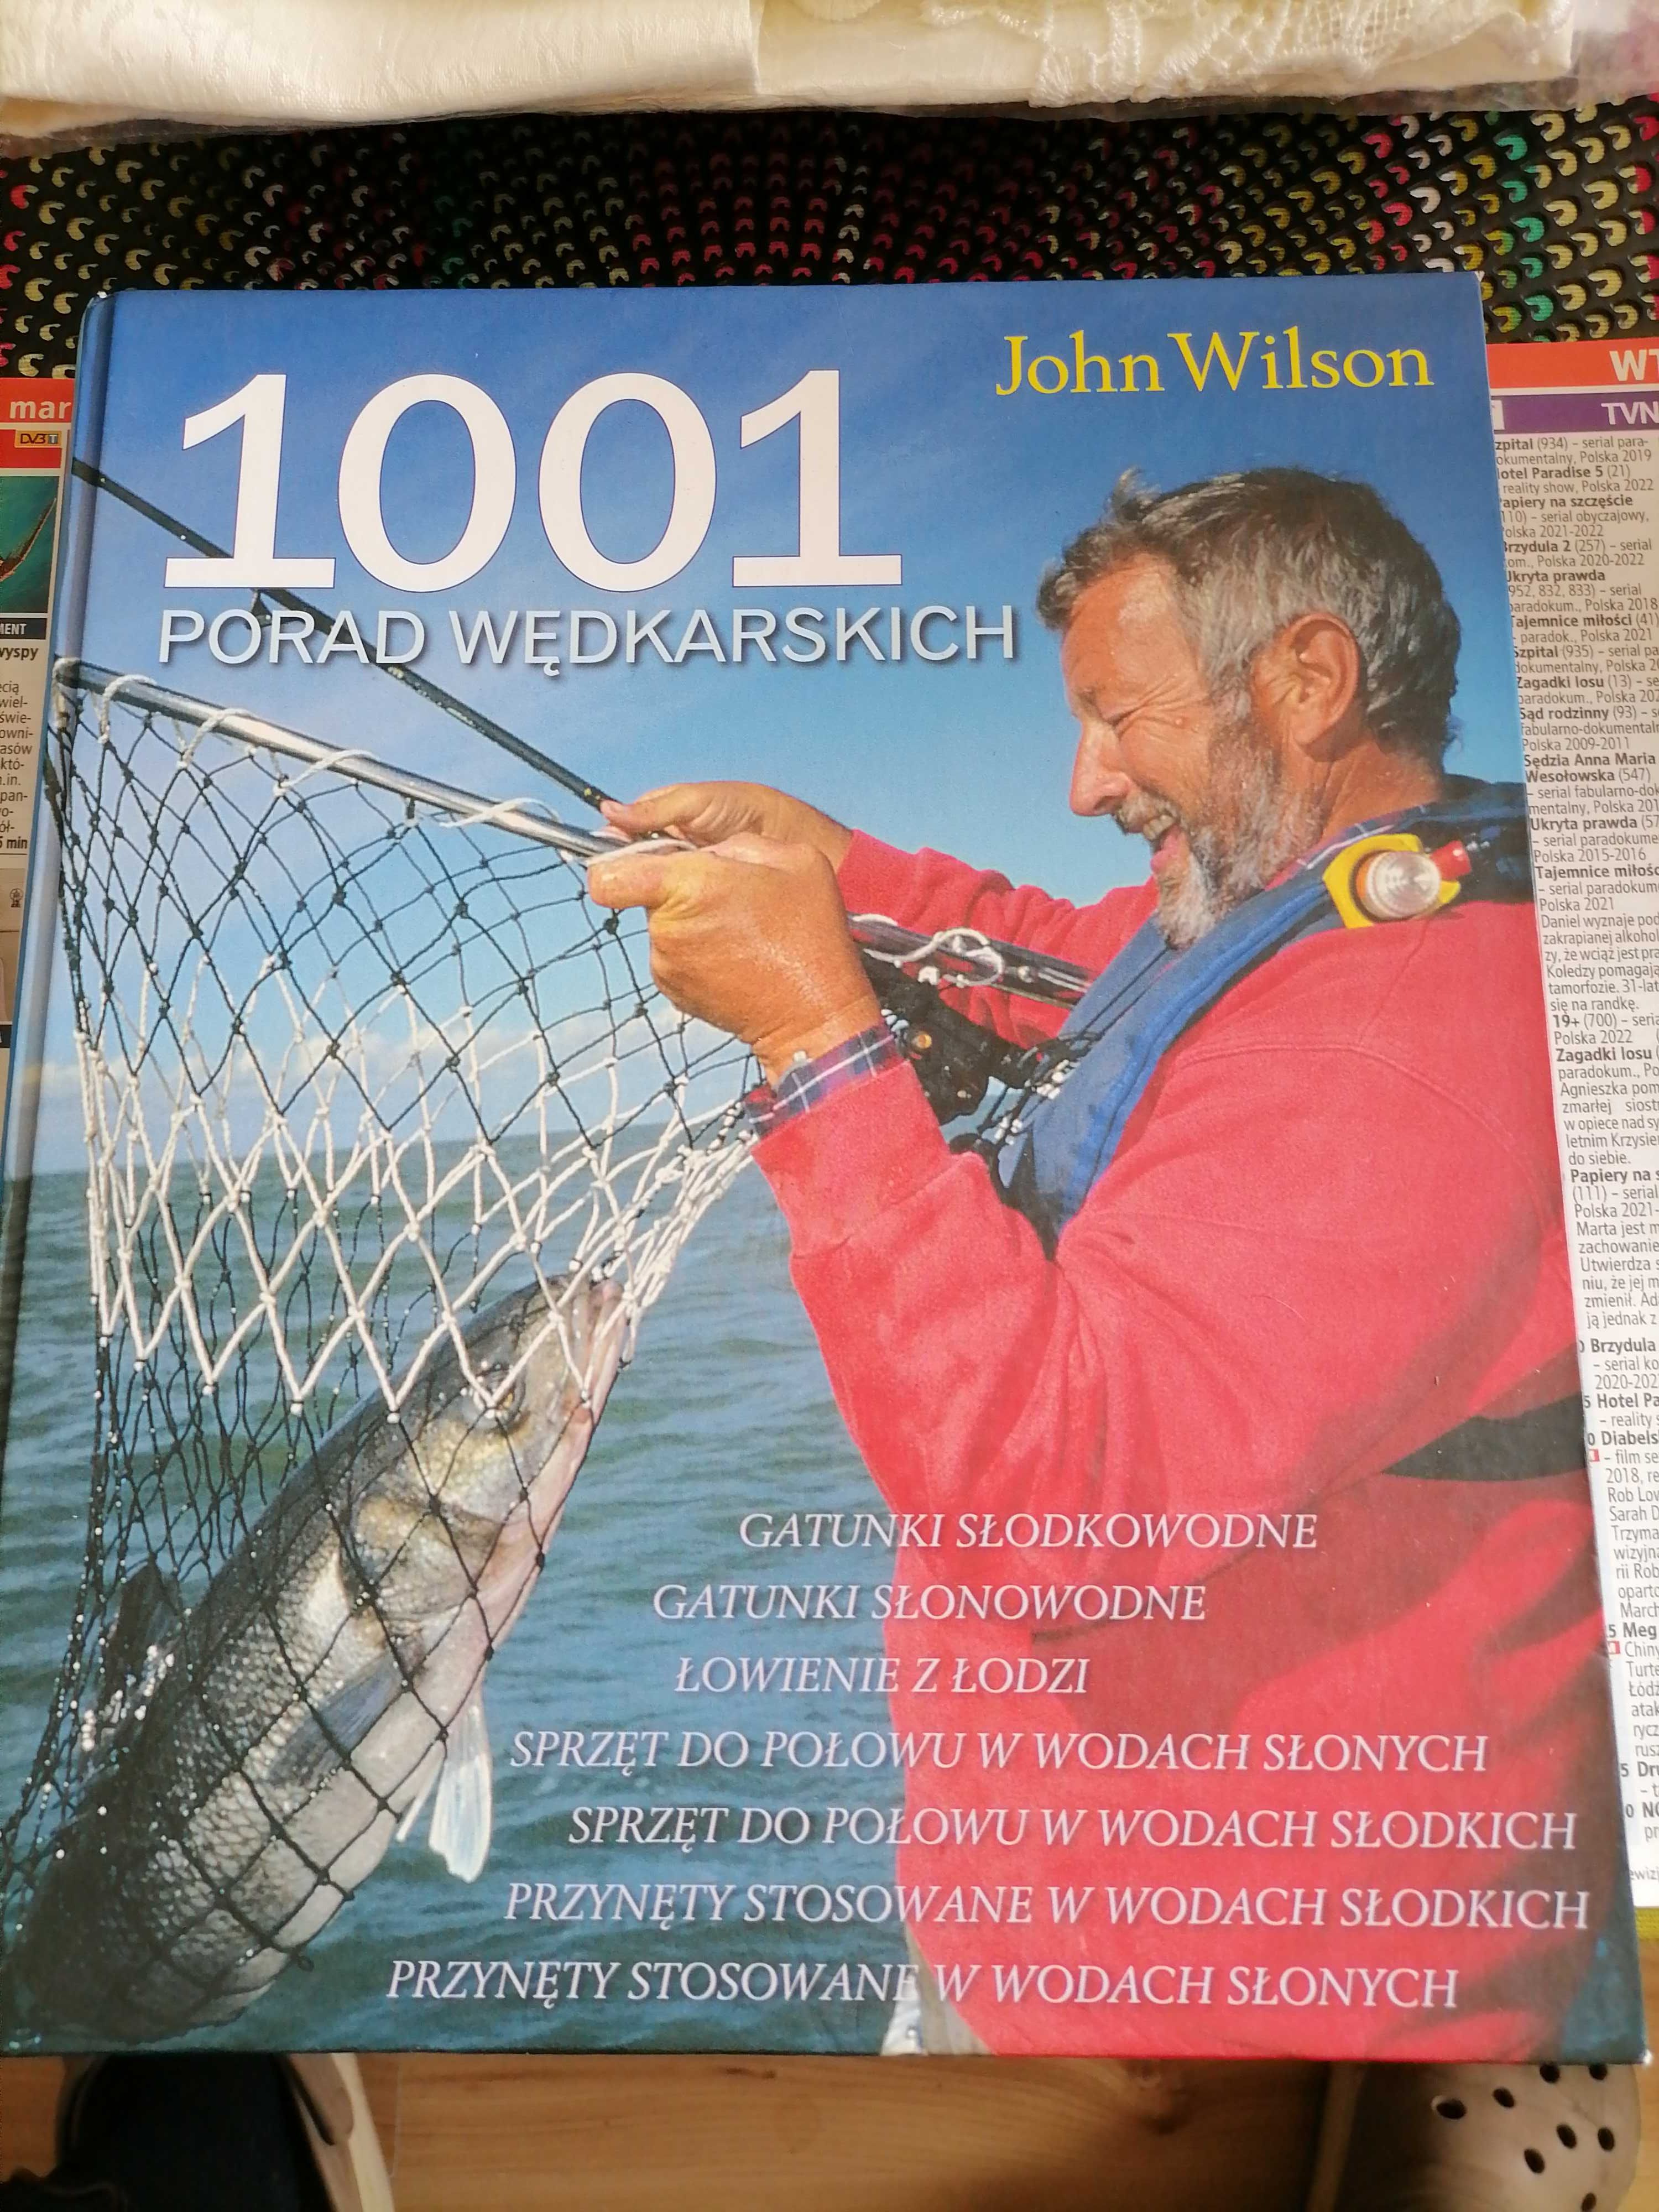 Wędkarstwo-1001 porad wędkarskich-John Wilson